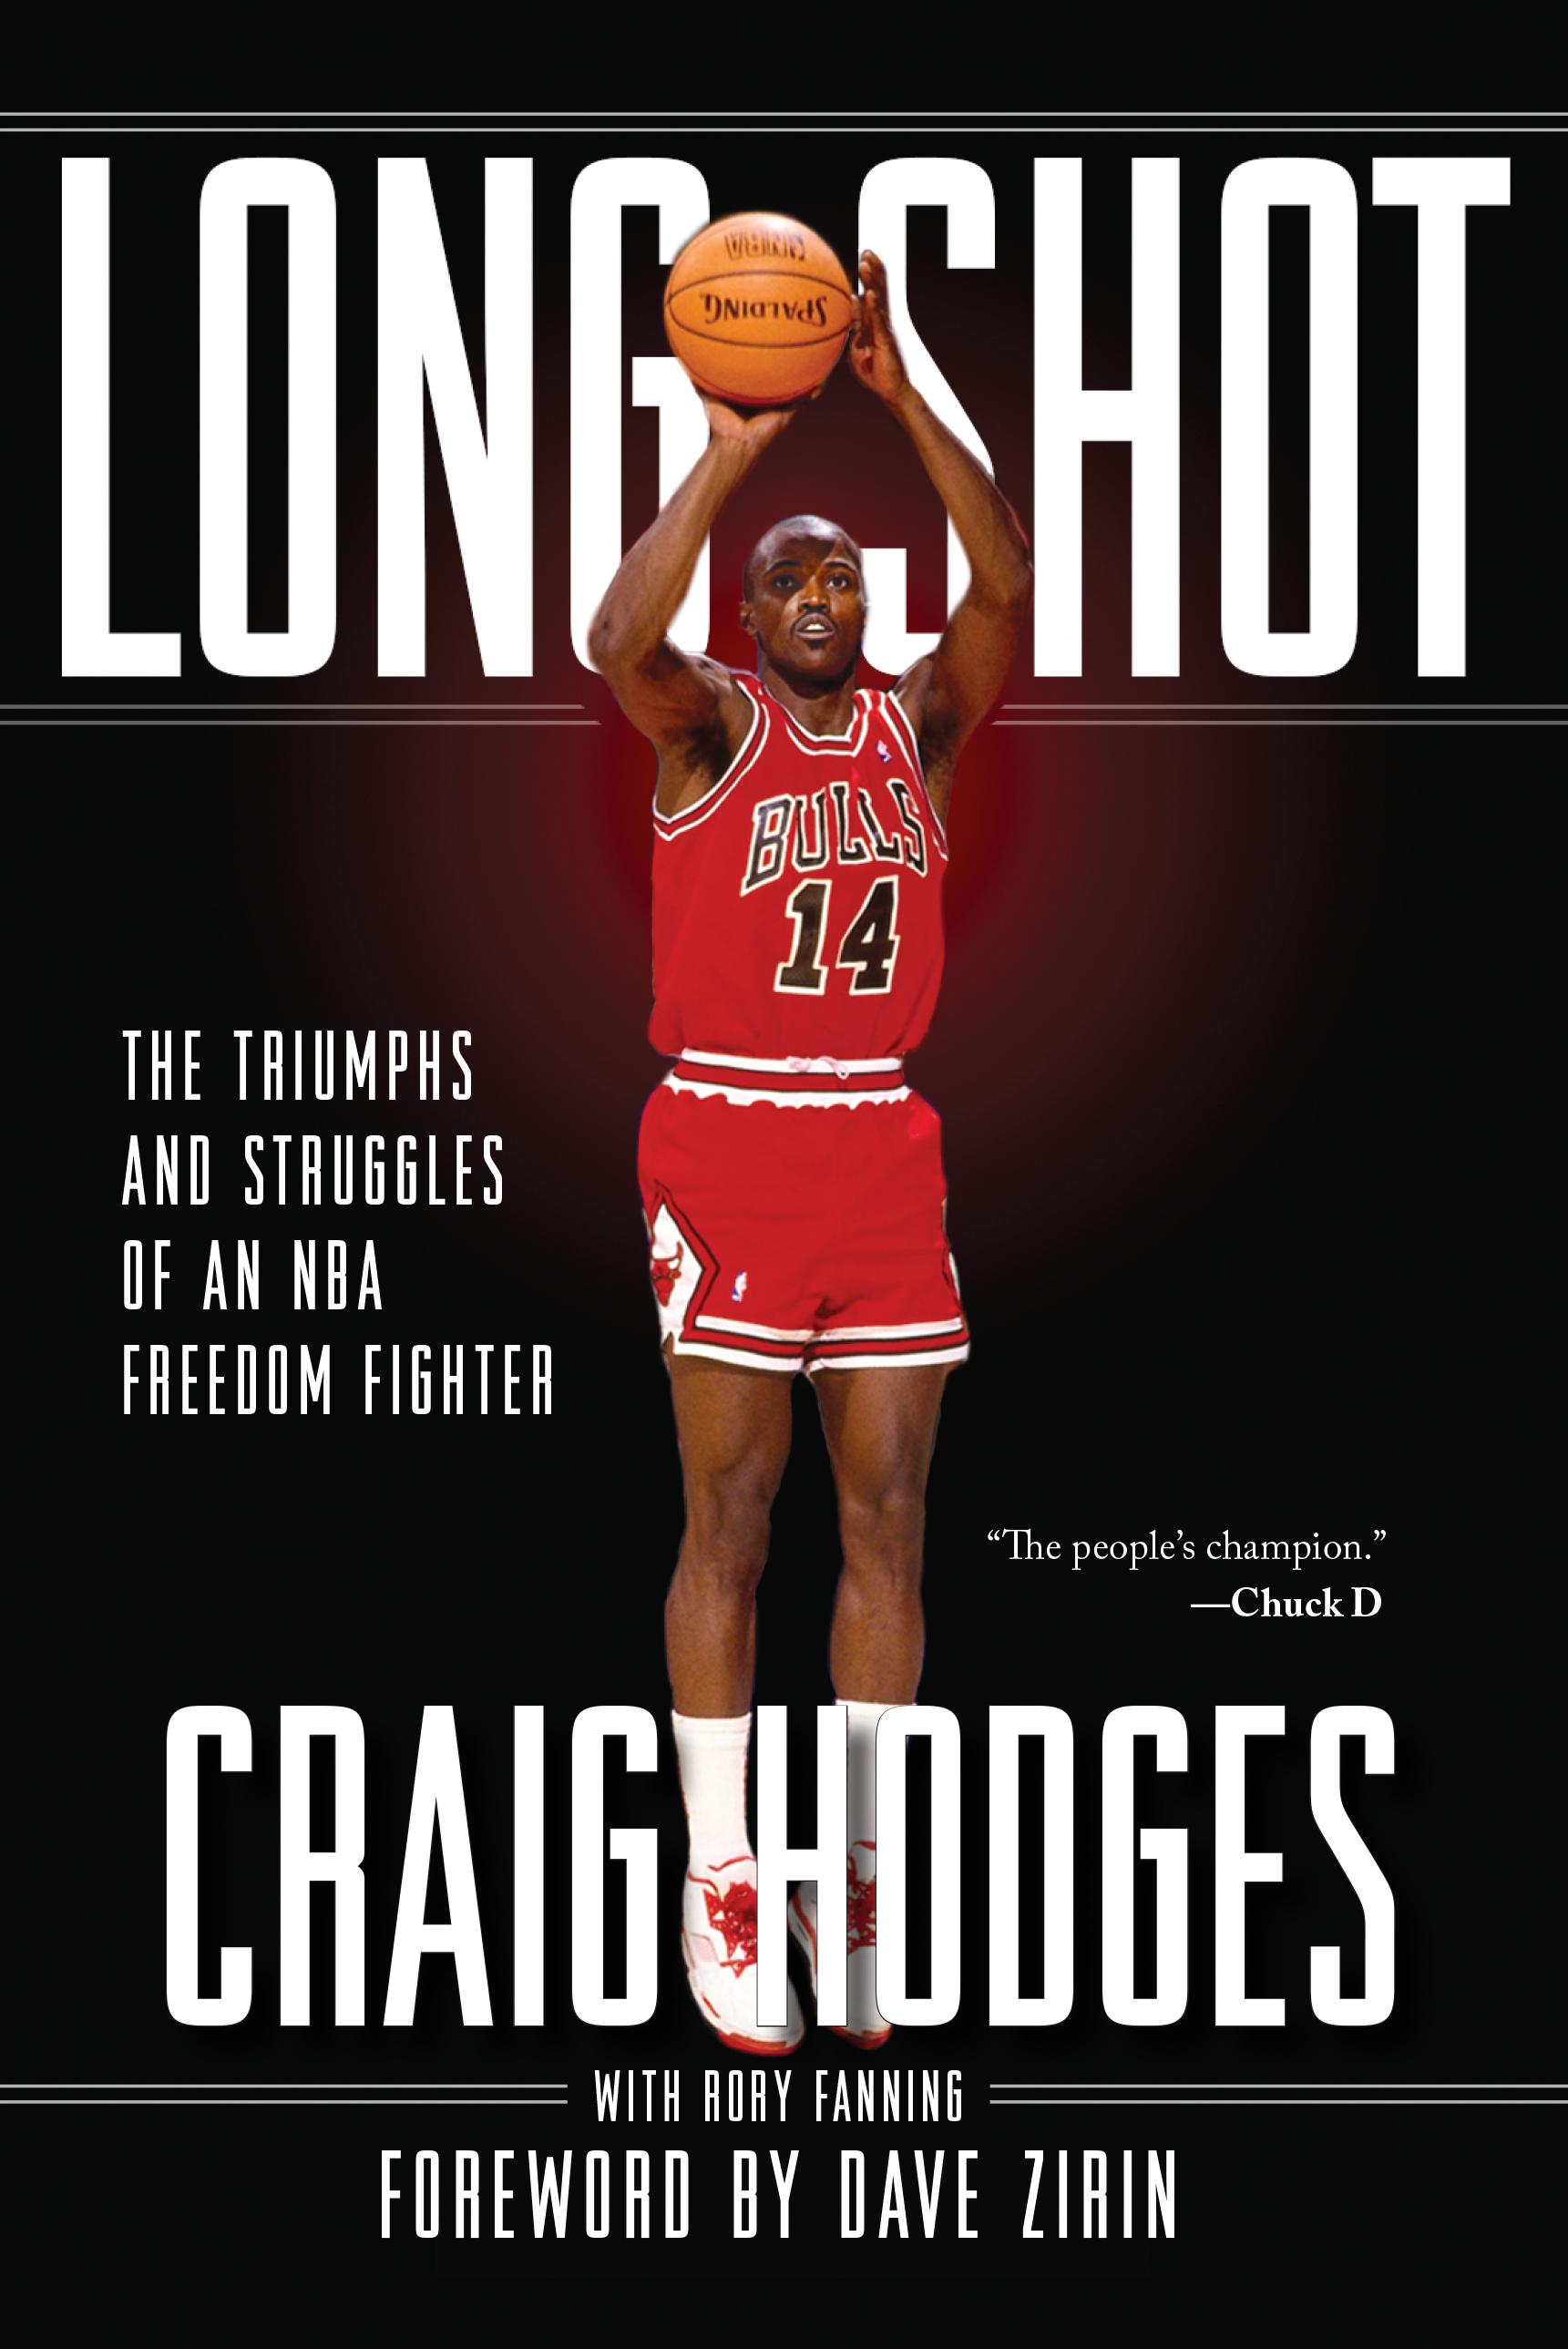 3-Ball in the Corner Pocket: Ex-Bull Craig Hodges Teaches Basketball  Fundamentals at Rich Central